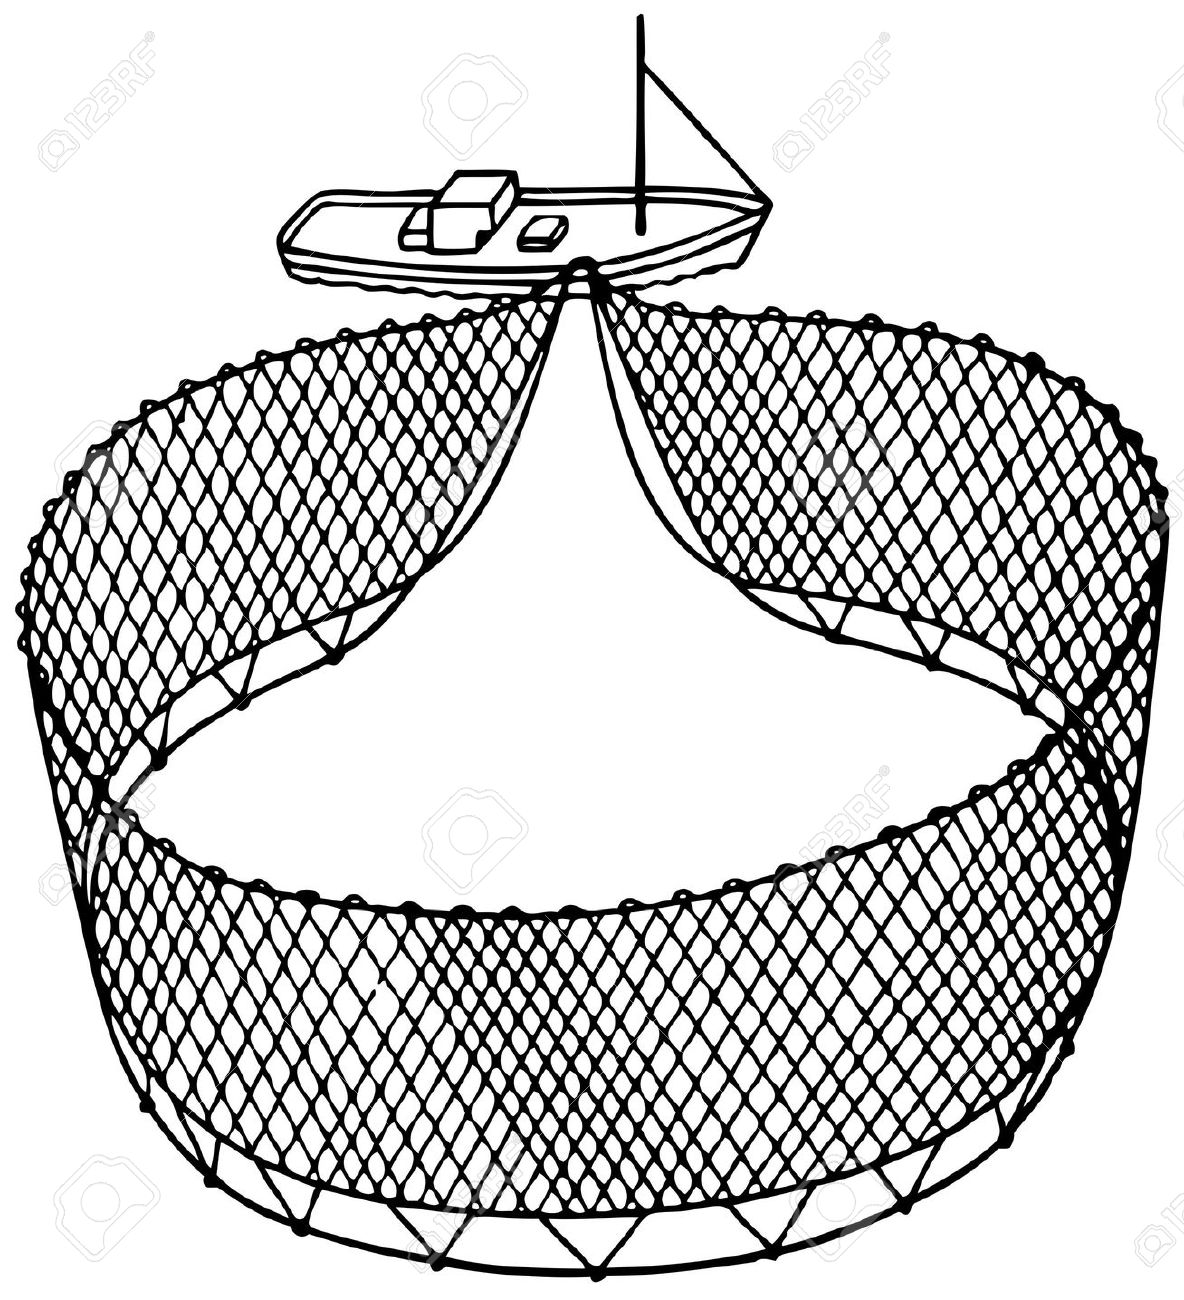 Fishing Net Clipart Black And White. Boat fishnet on white .